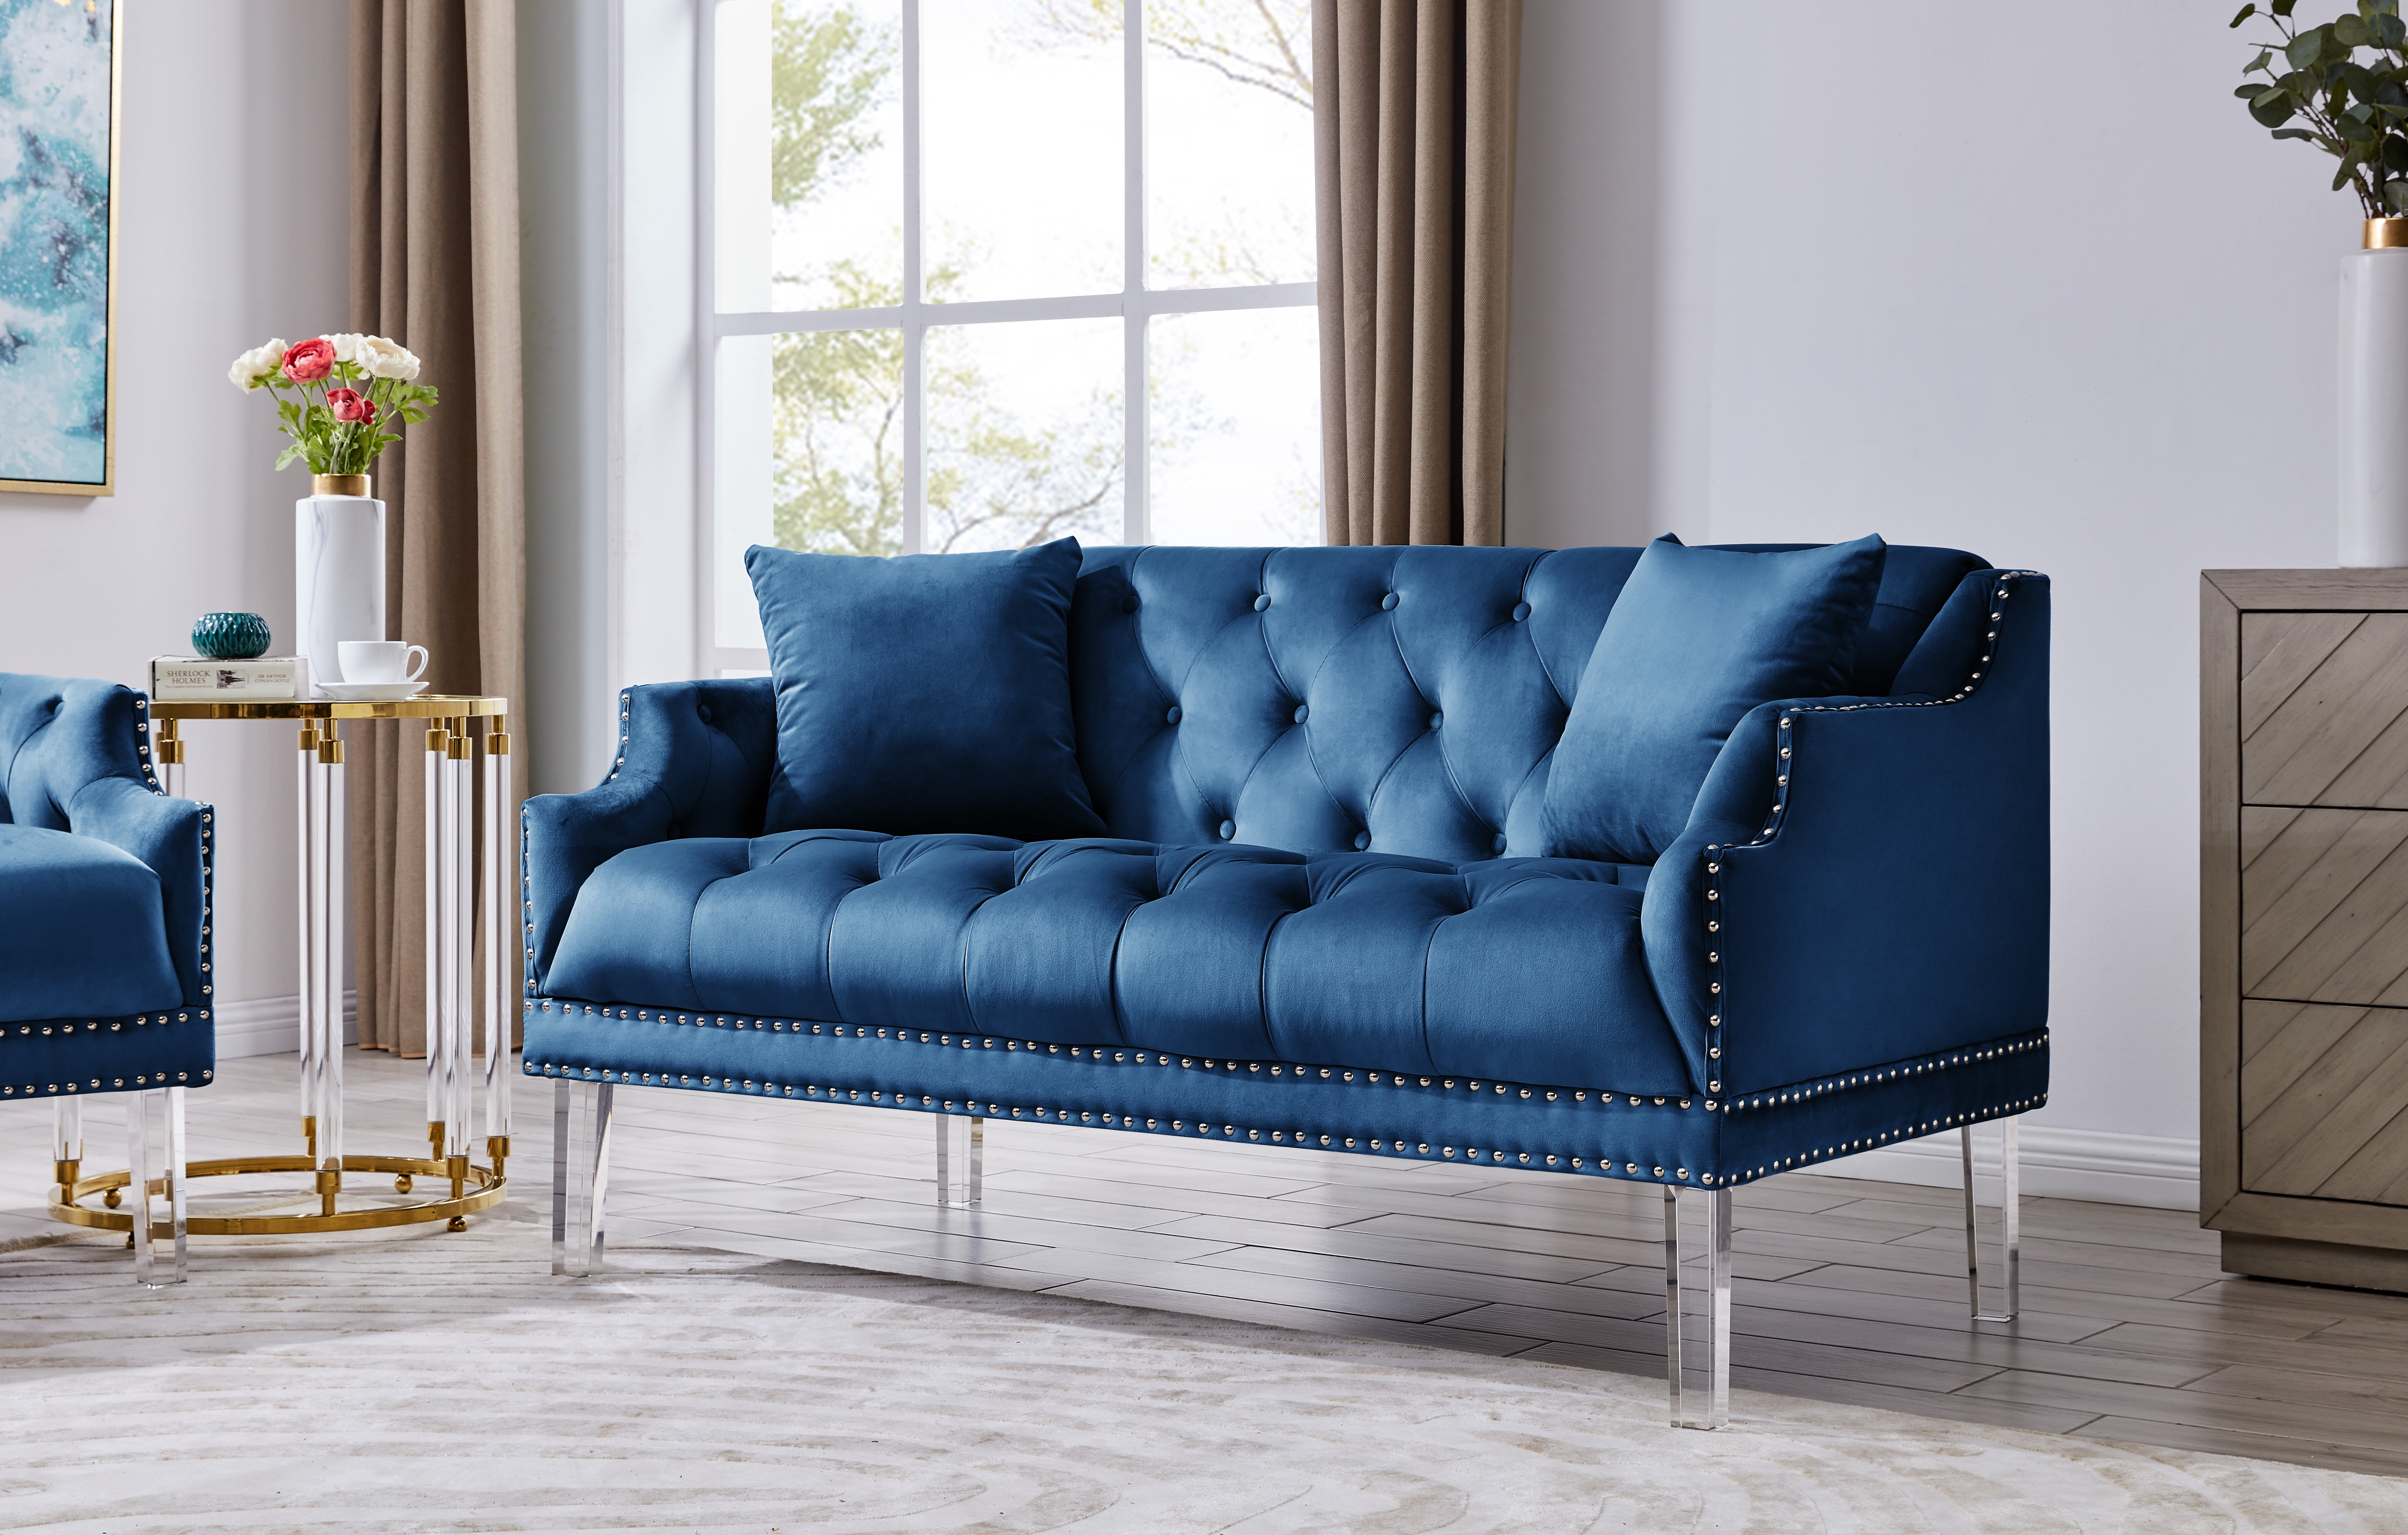 Fls9556-us Eva Love Seat Sofa With Velvet Upholstered Button Tufted Nailhead Trim Slope Arm Design Acrylic Legs, Modern Transitional, Blue